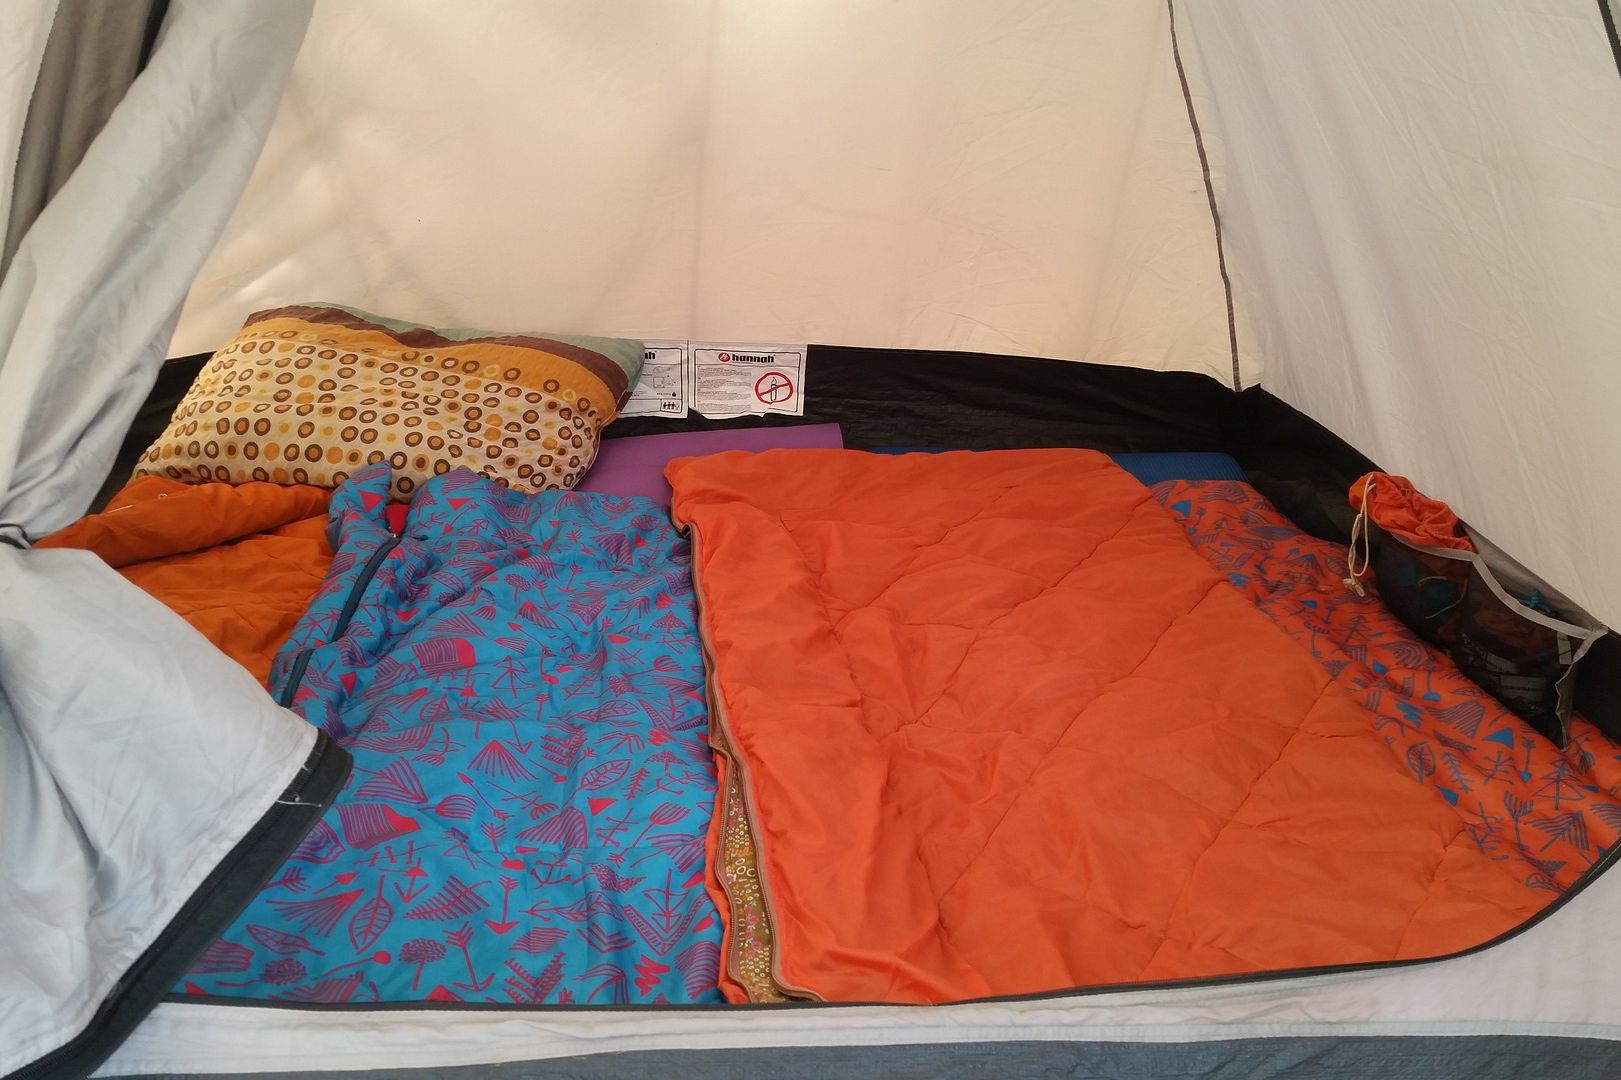 Erholsam schlafen im Zelt - Zeltratgeber - Hilfe & Beratung